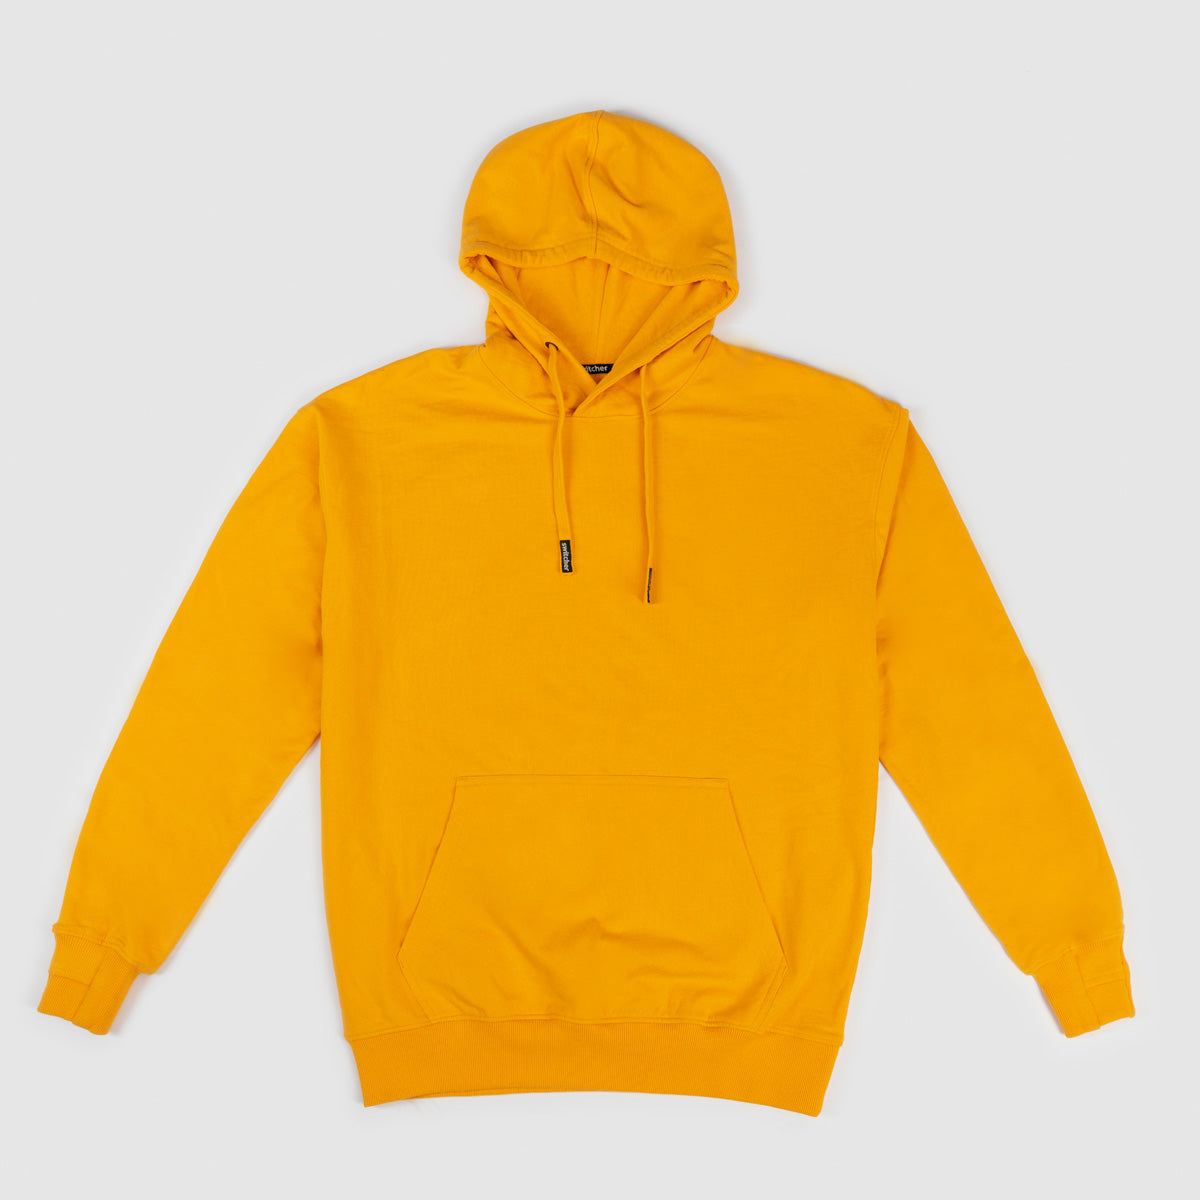 Yellow hoodie for men